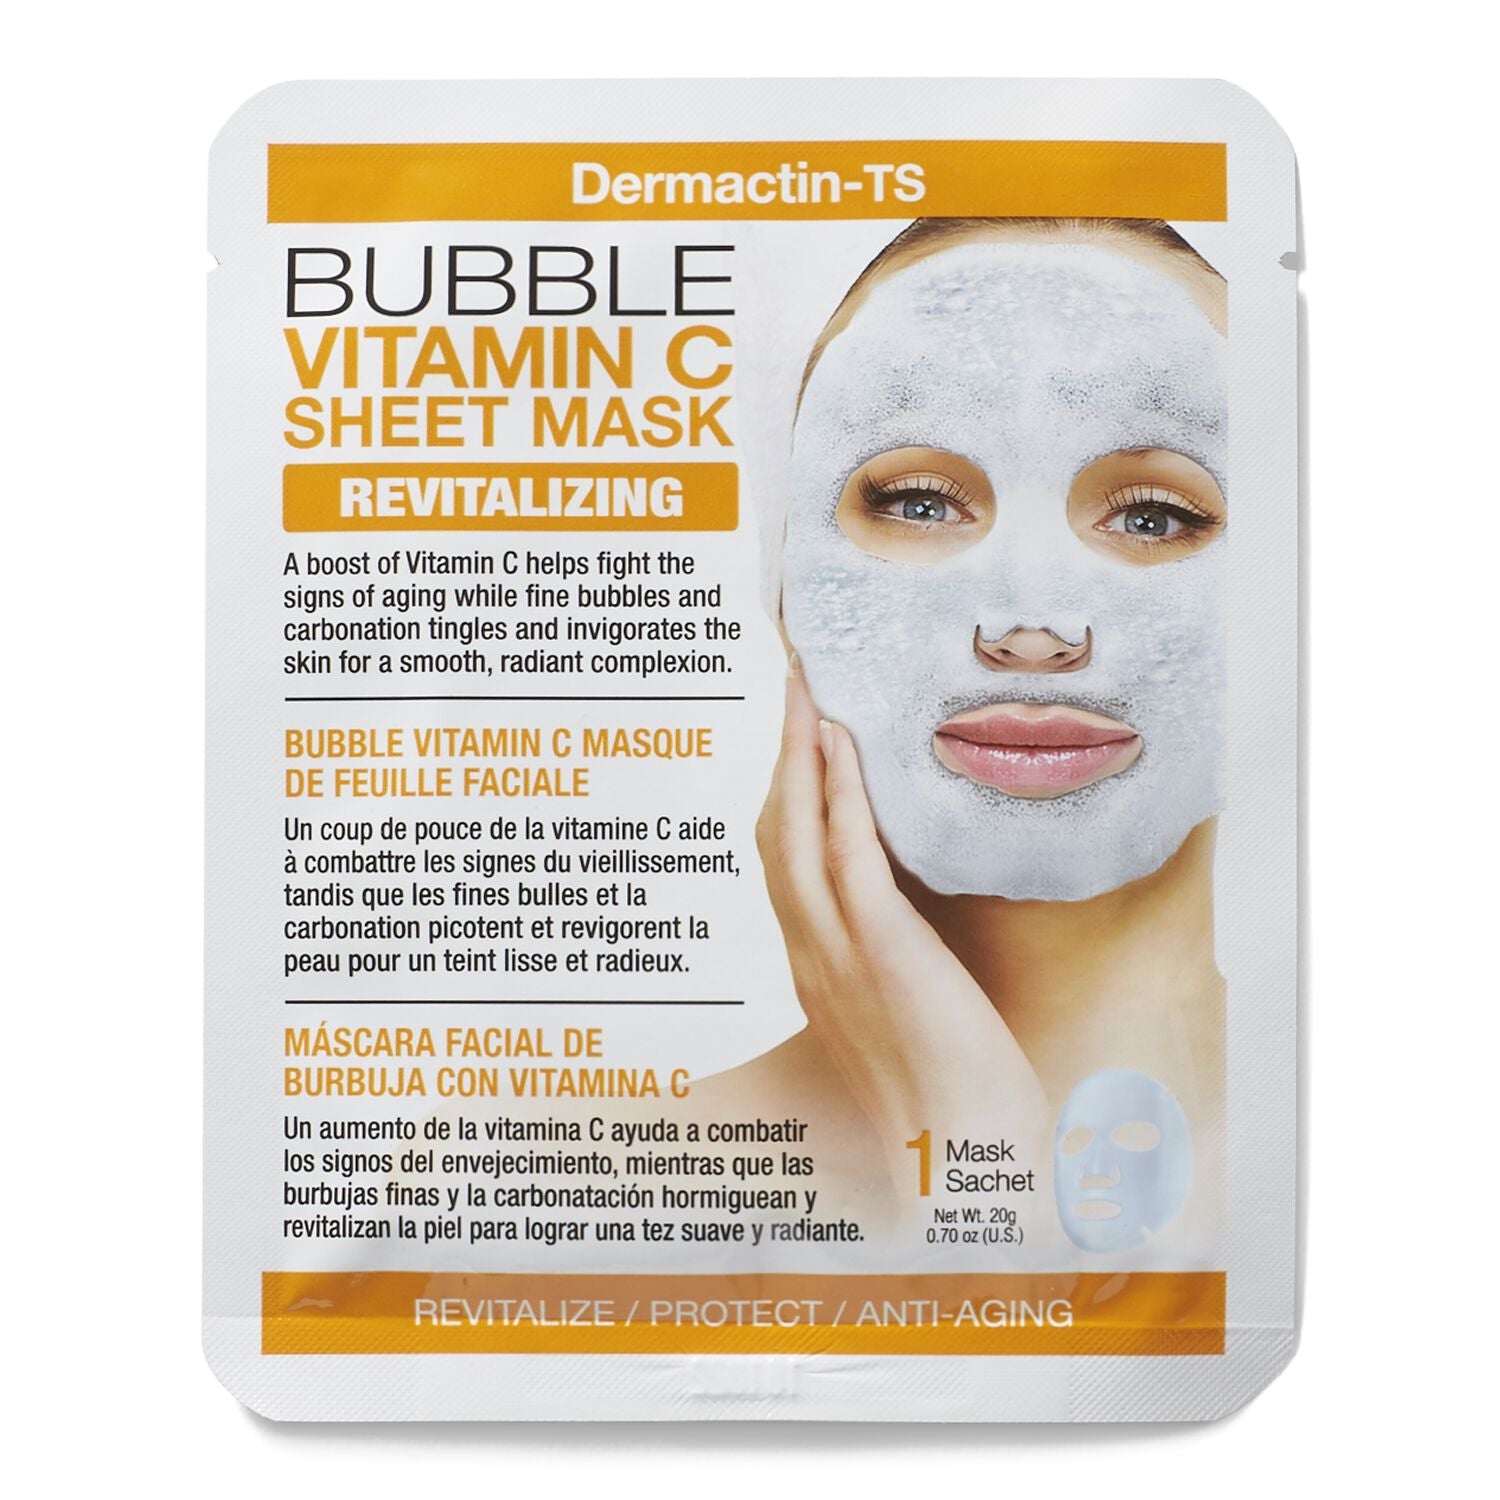 Dermactin-TS Bubble Vitamin C Sheet Mask